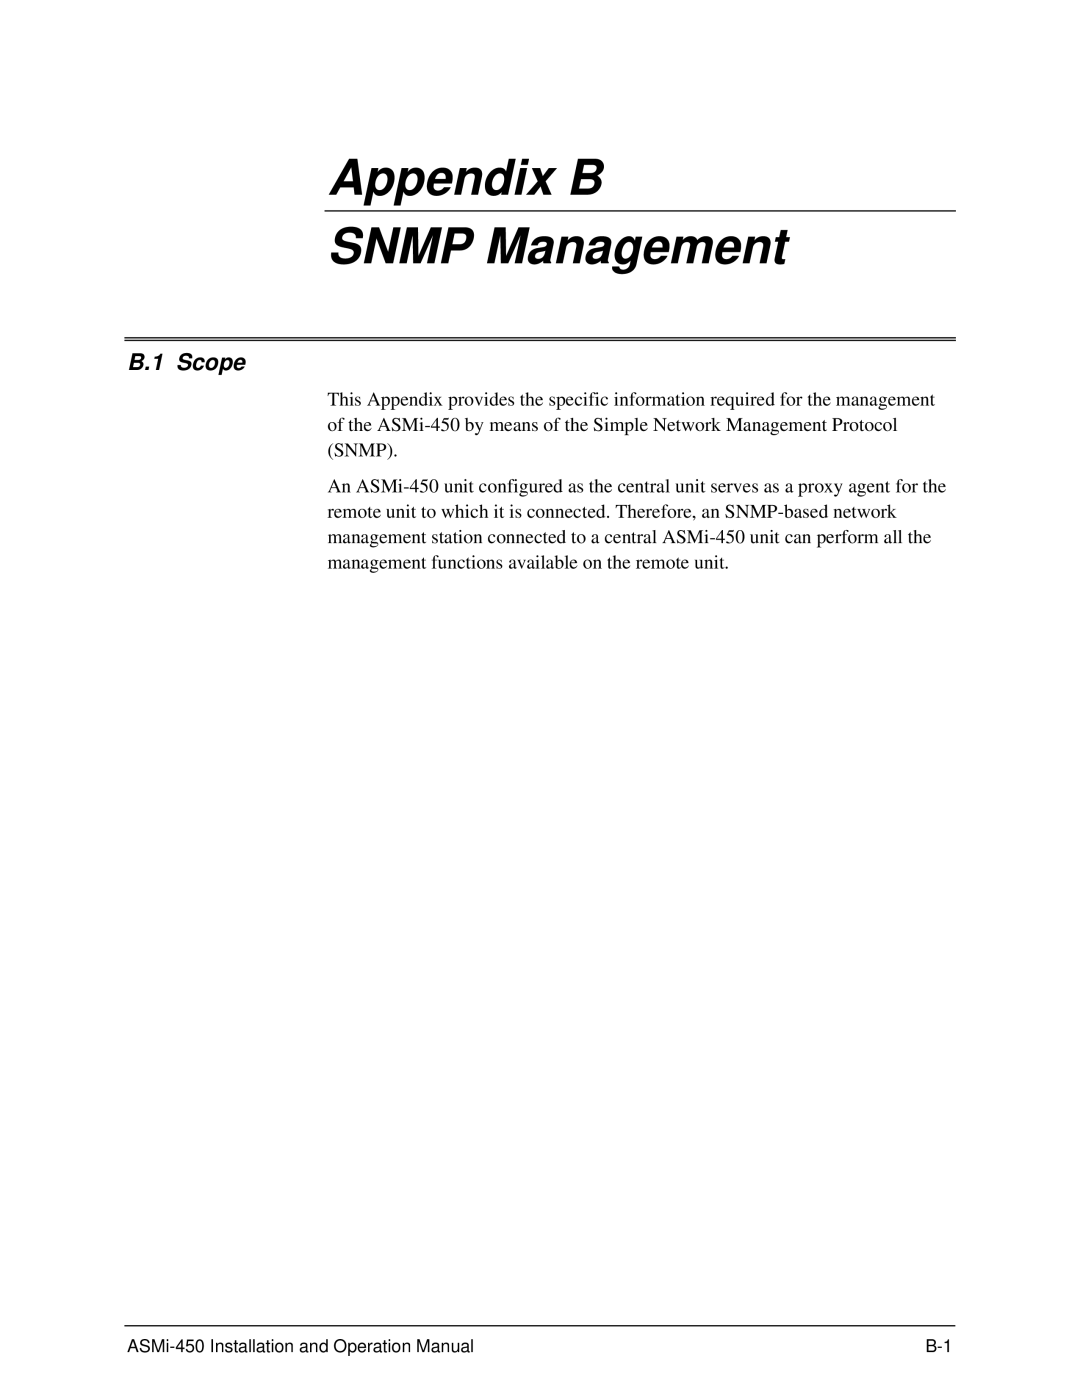 RAD Data comm ASMI-450 operation manual Appendix B SNMP Management, B.1 Scope 